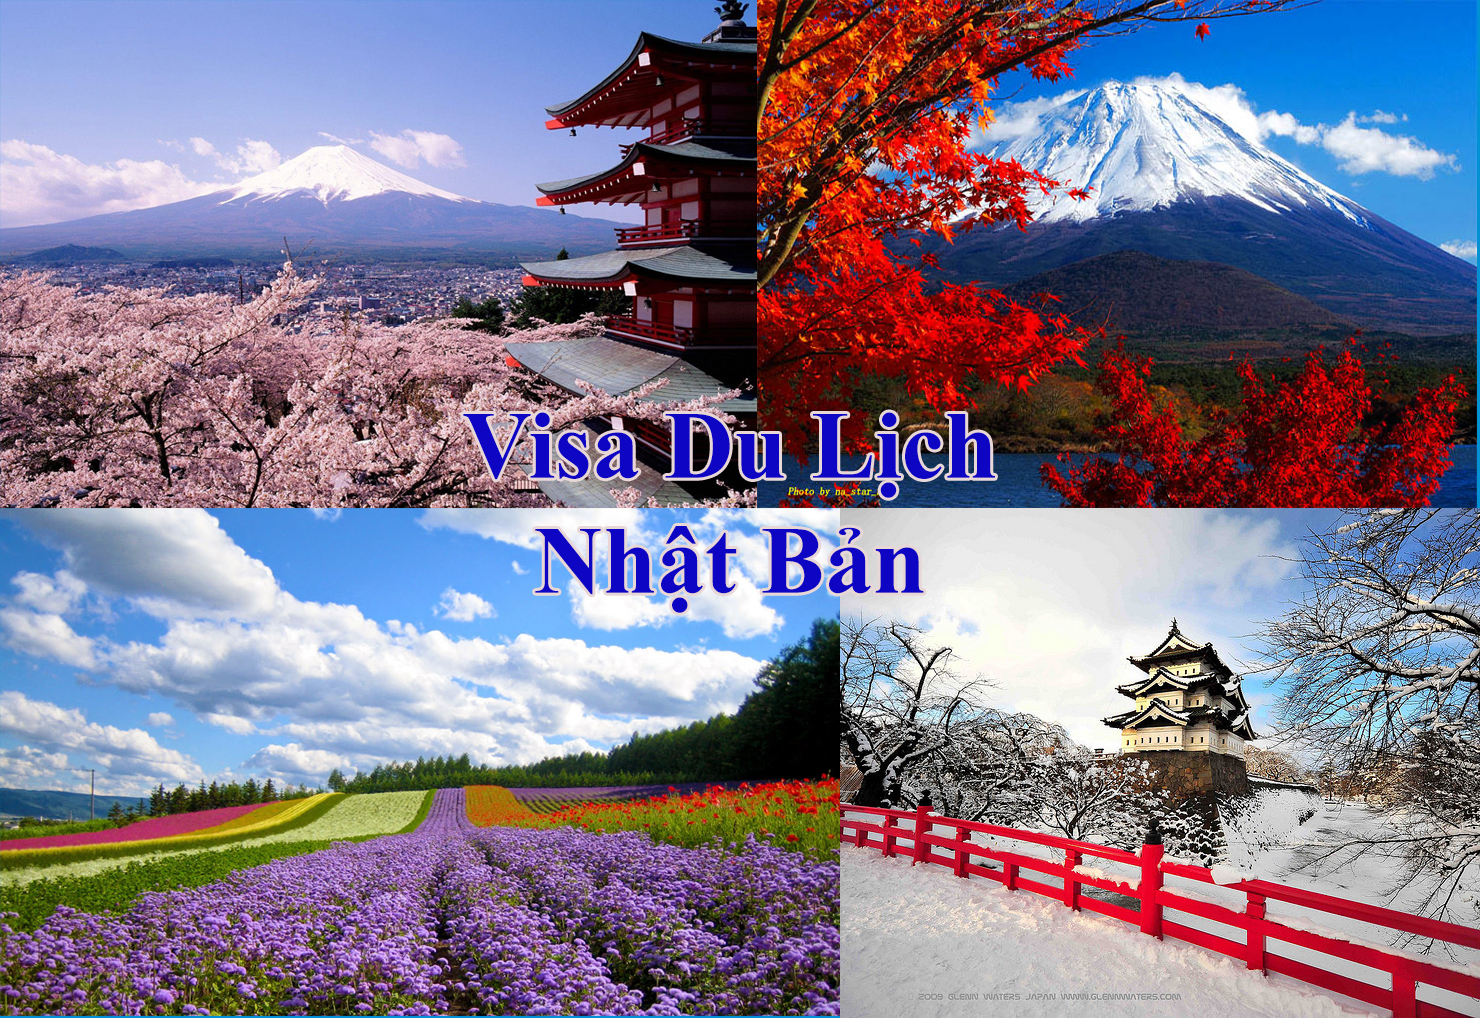 Visa du lịch Nhật Bản | Vietnam-Legal.com